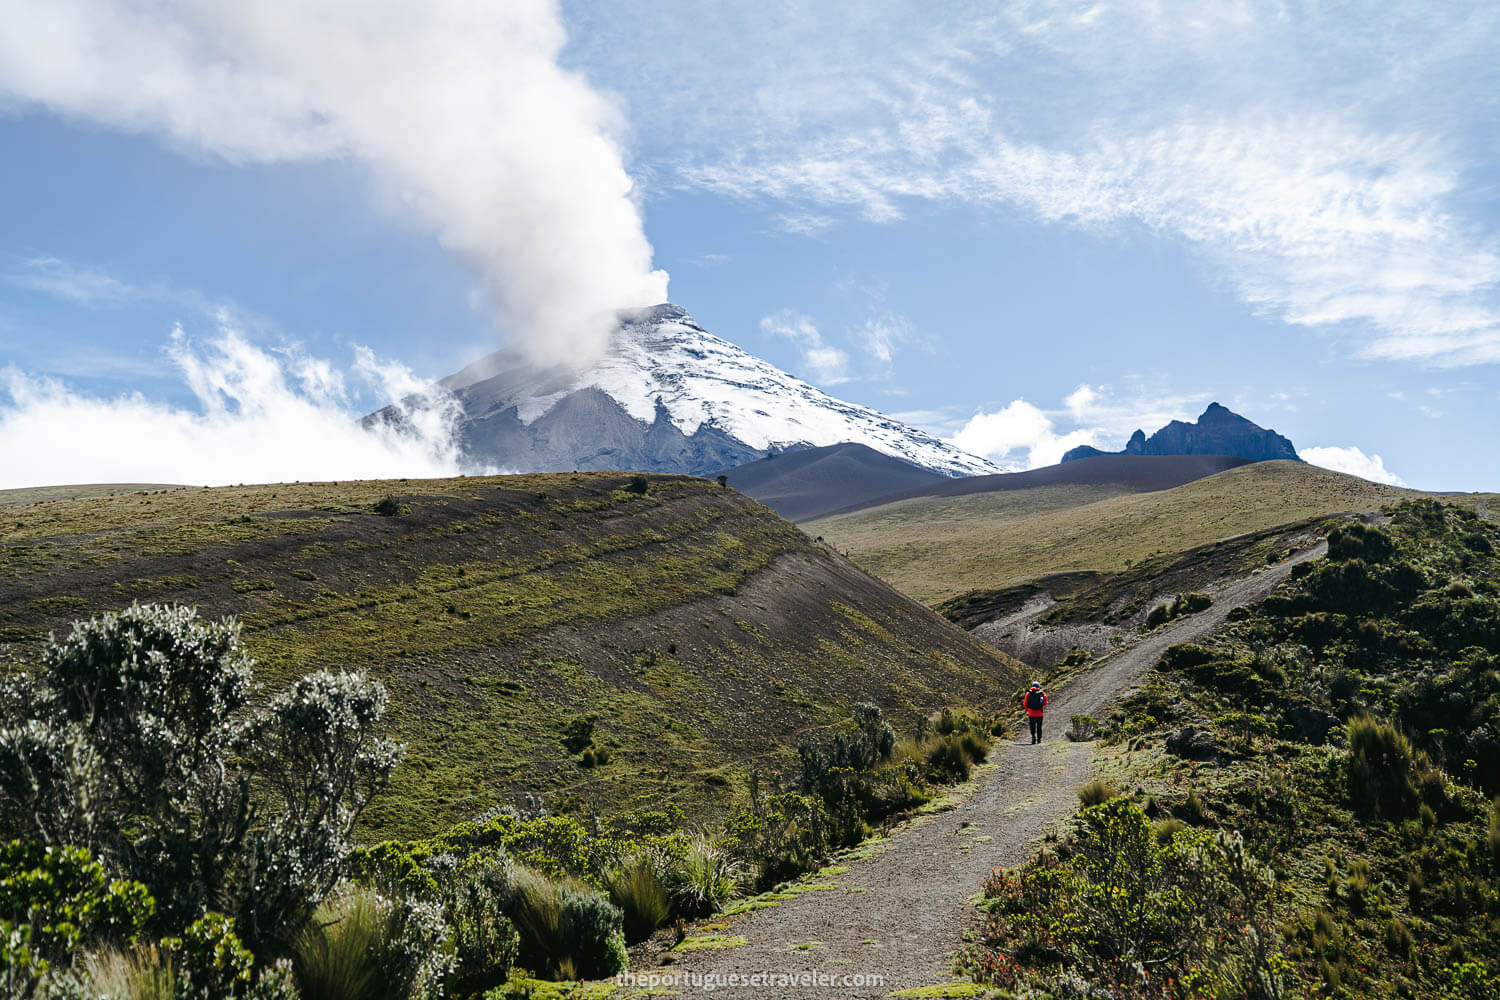 The views to Cotopaxi volcano and Morurco